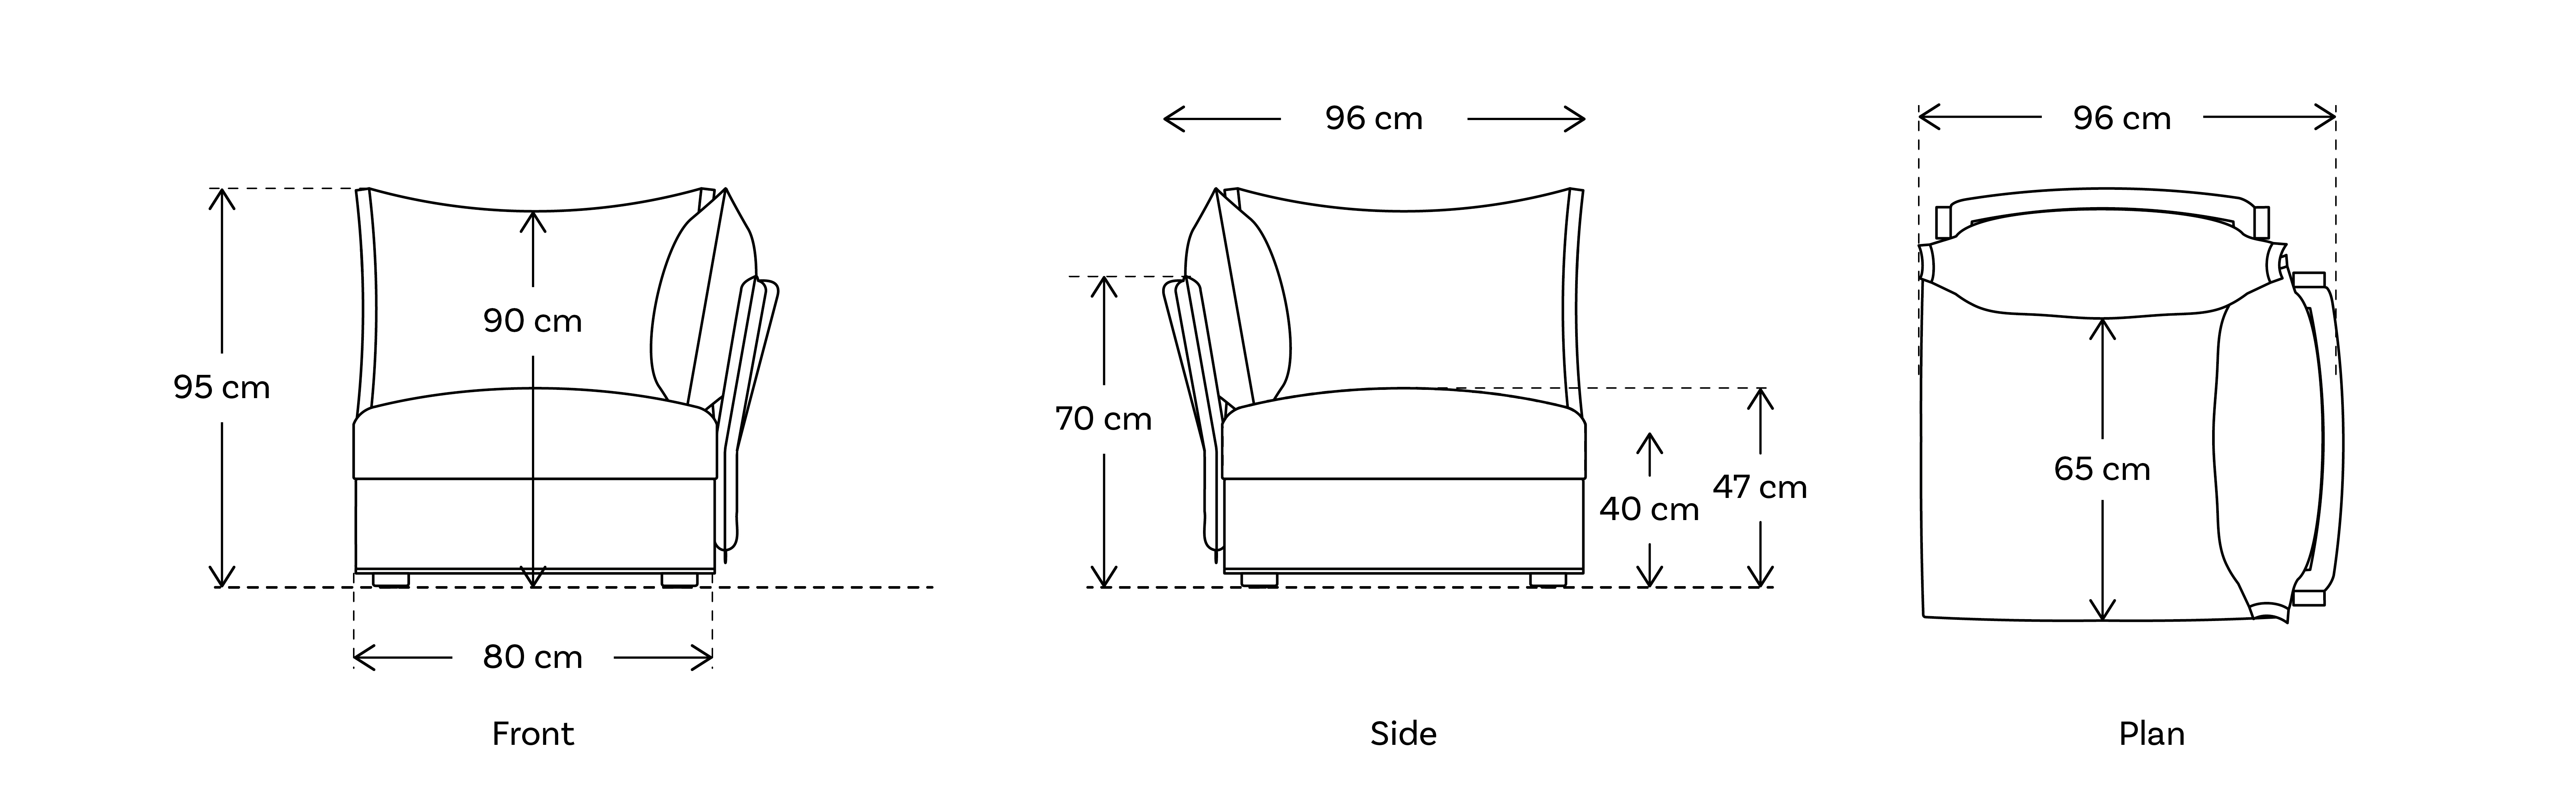 module sofa corner dimensions